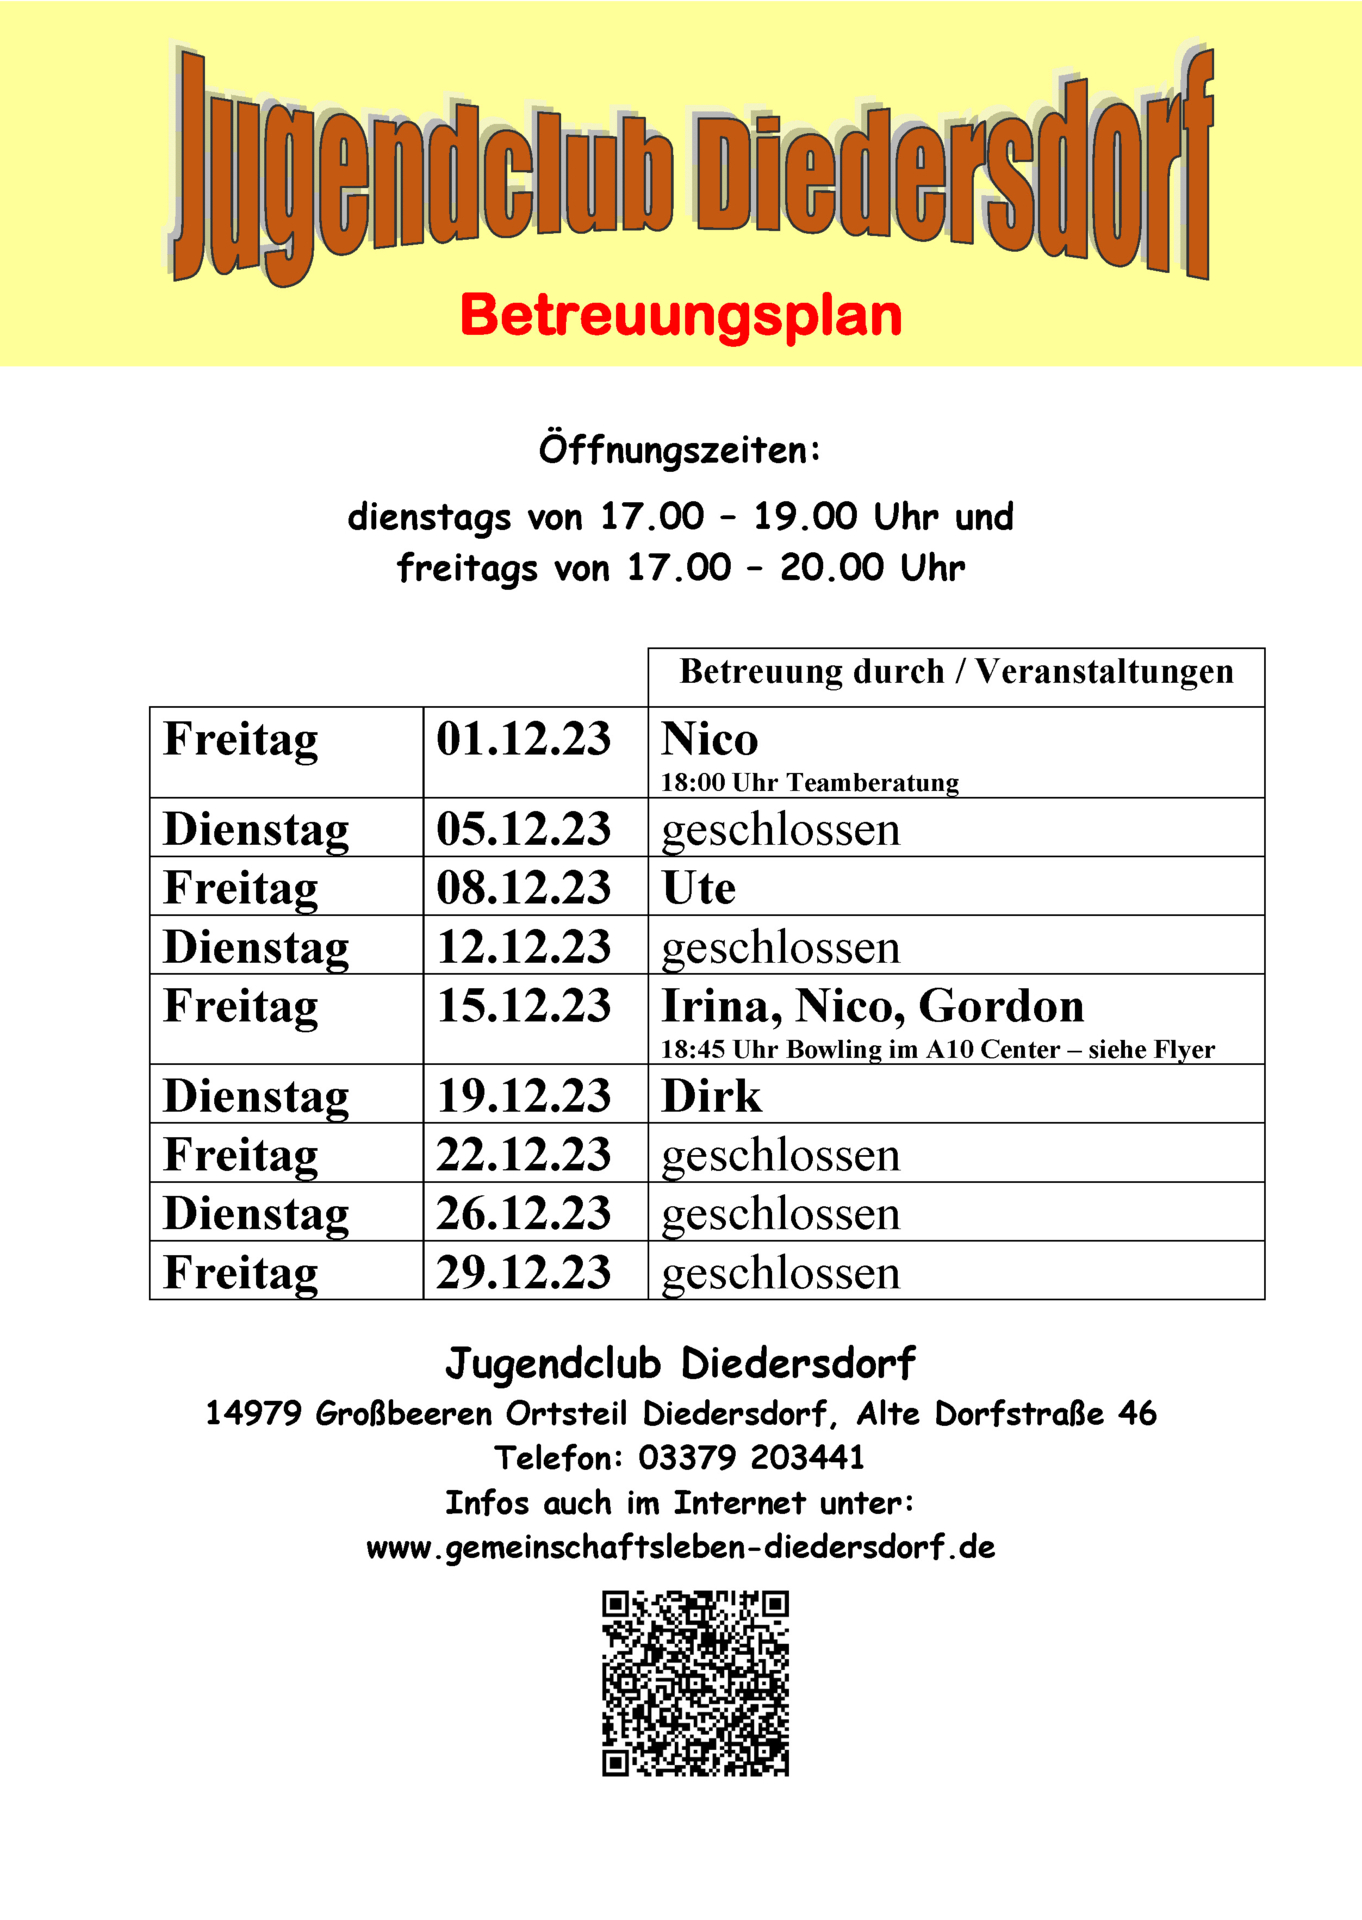 Betreuungsplan Jugendclub Diedersdorf - 12/2023